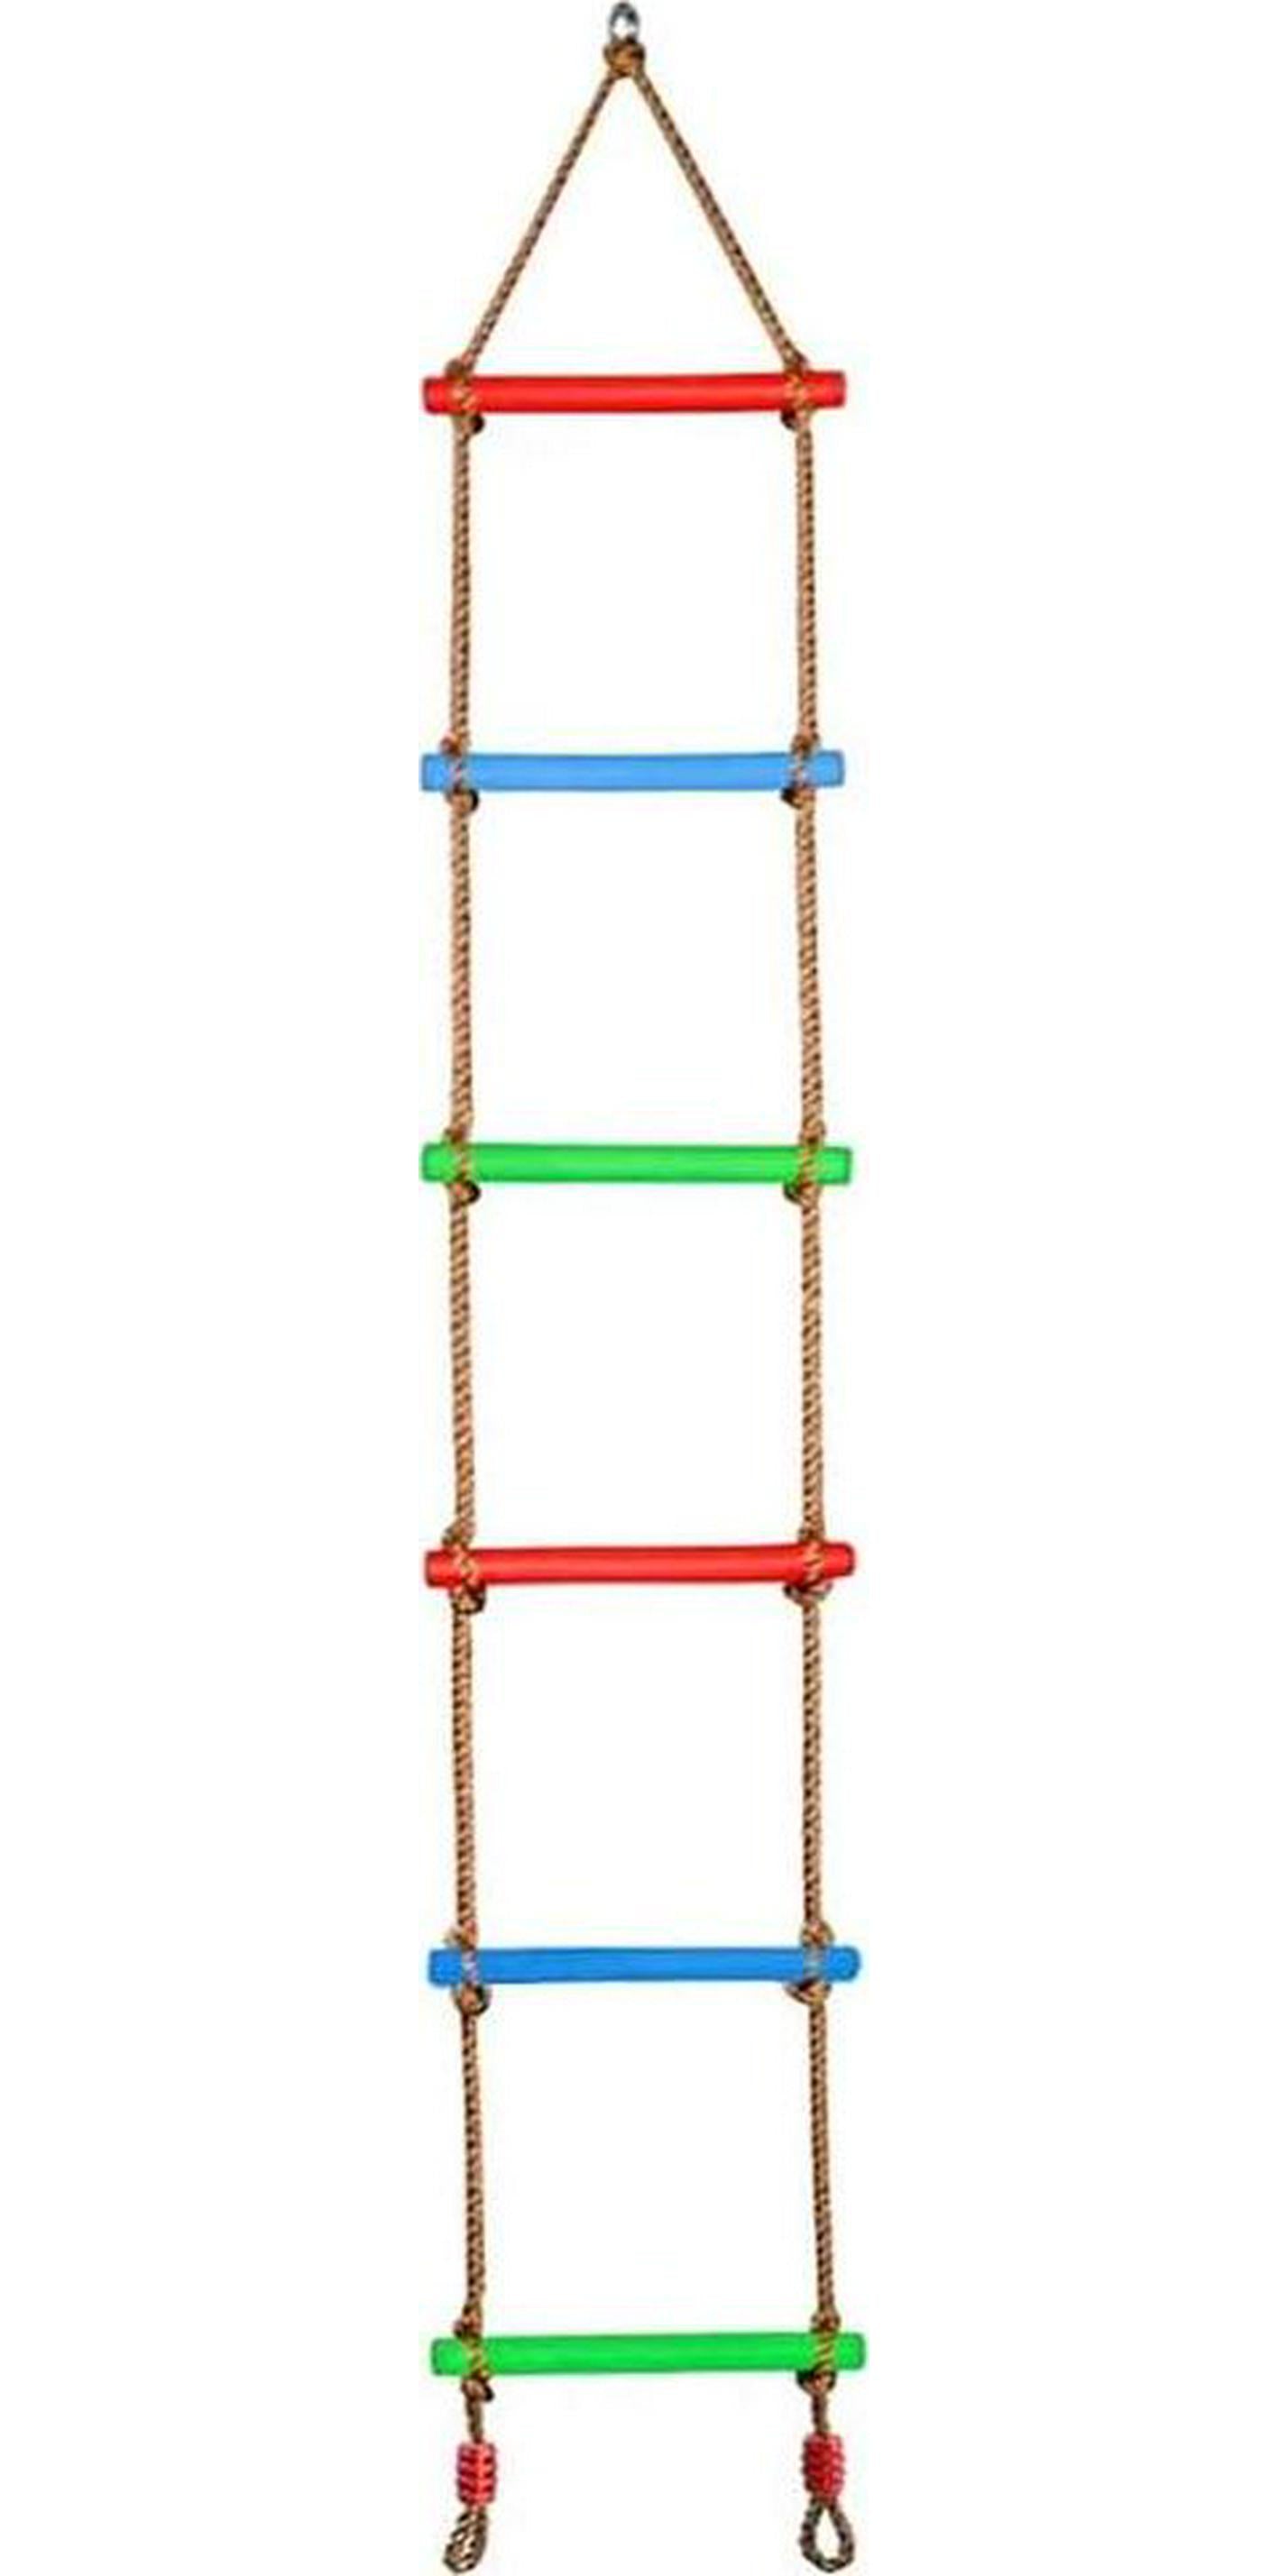 letsgood, letsgood Colorful Climbing Rope Ladder for Kids - Playground Accessories Swing Ladder for Tree House, Ninja Line, Swing Set - Outdoor Backyard Indoor Ninjaline Ladder